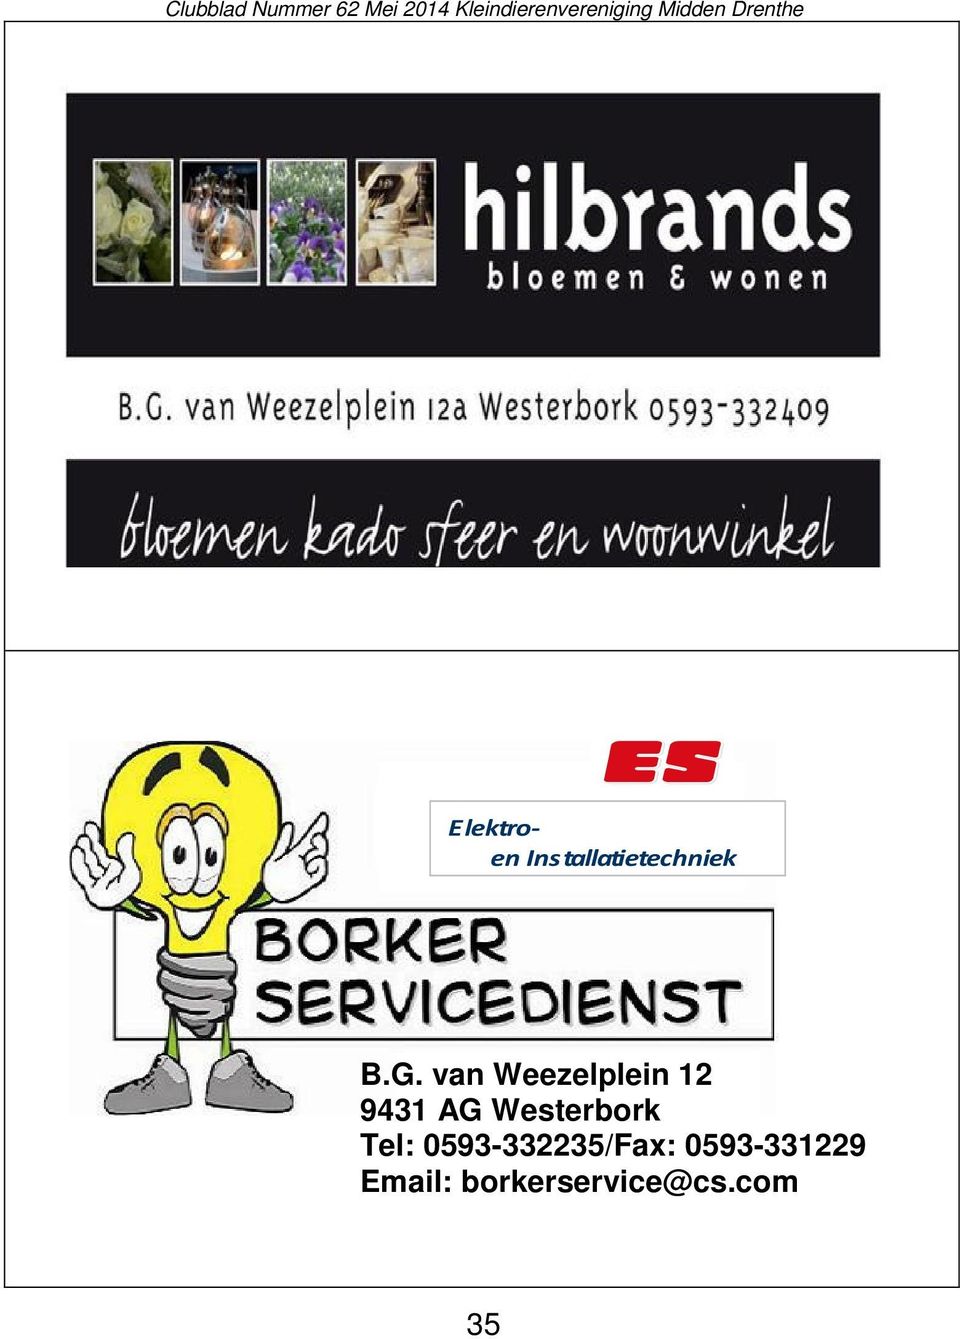 Westerbork Tel: 0593-332235/Fax: